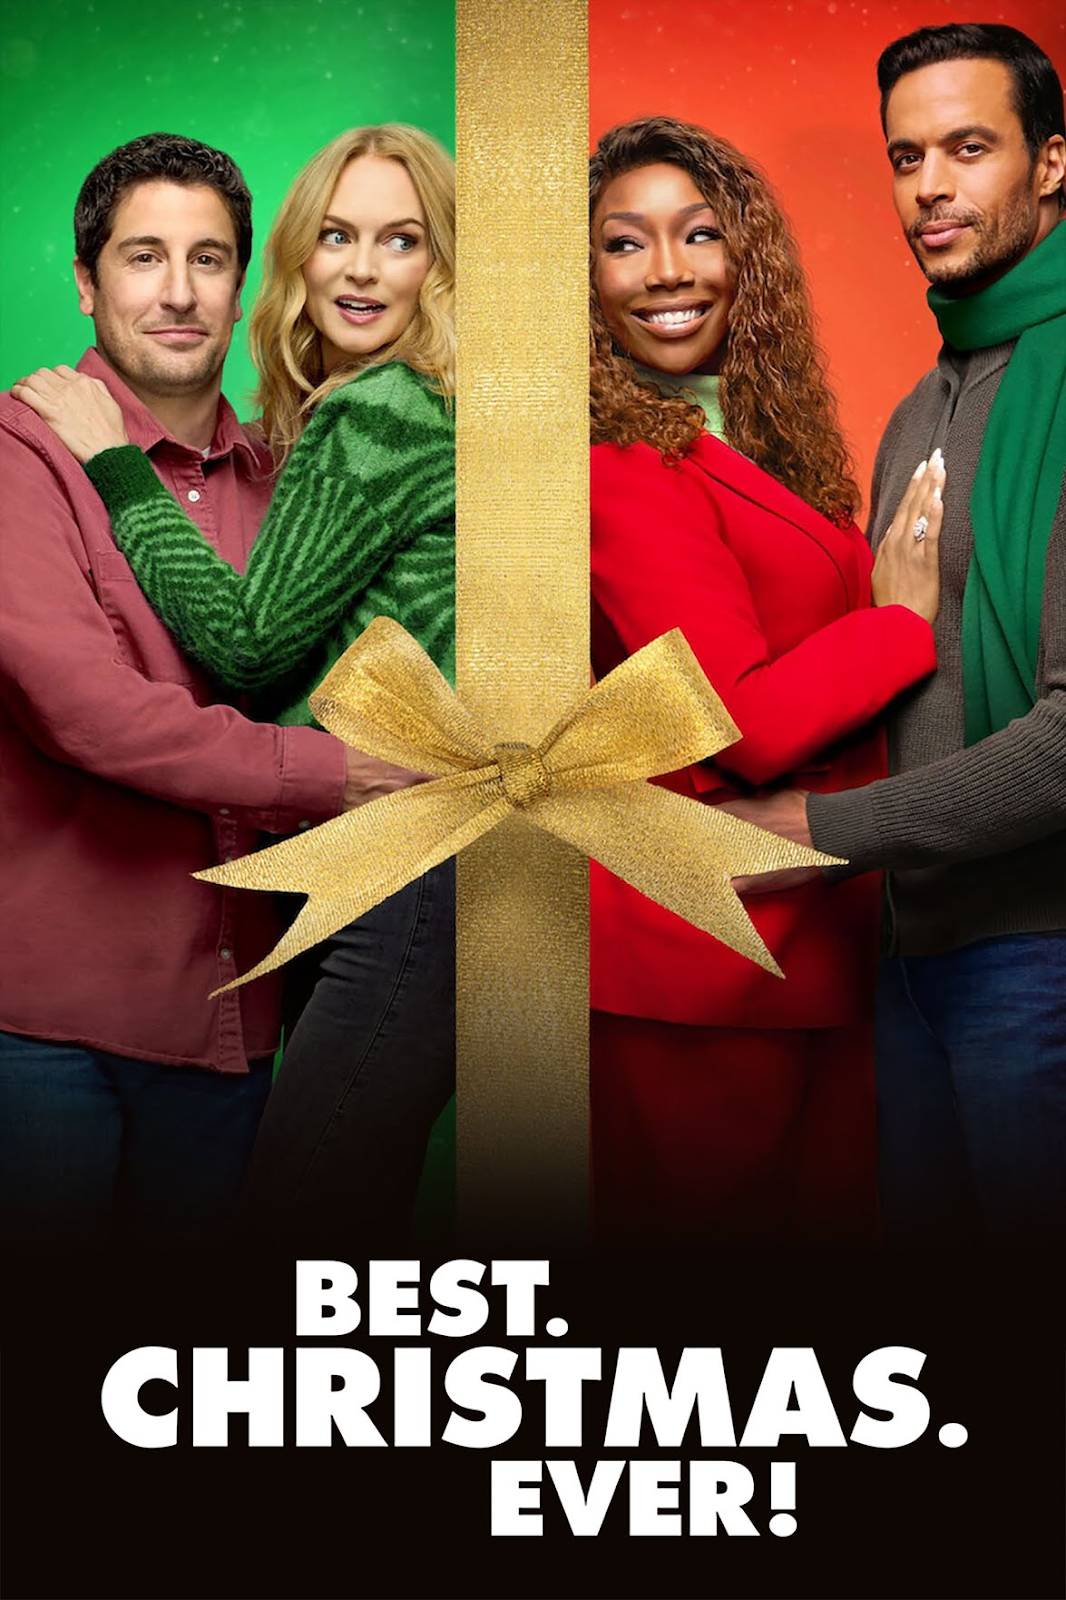 Mejor Navidad, ¡imposible! en Netflix